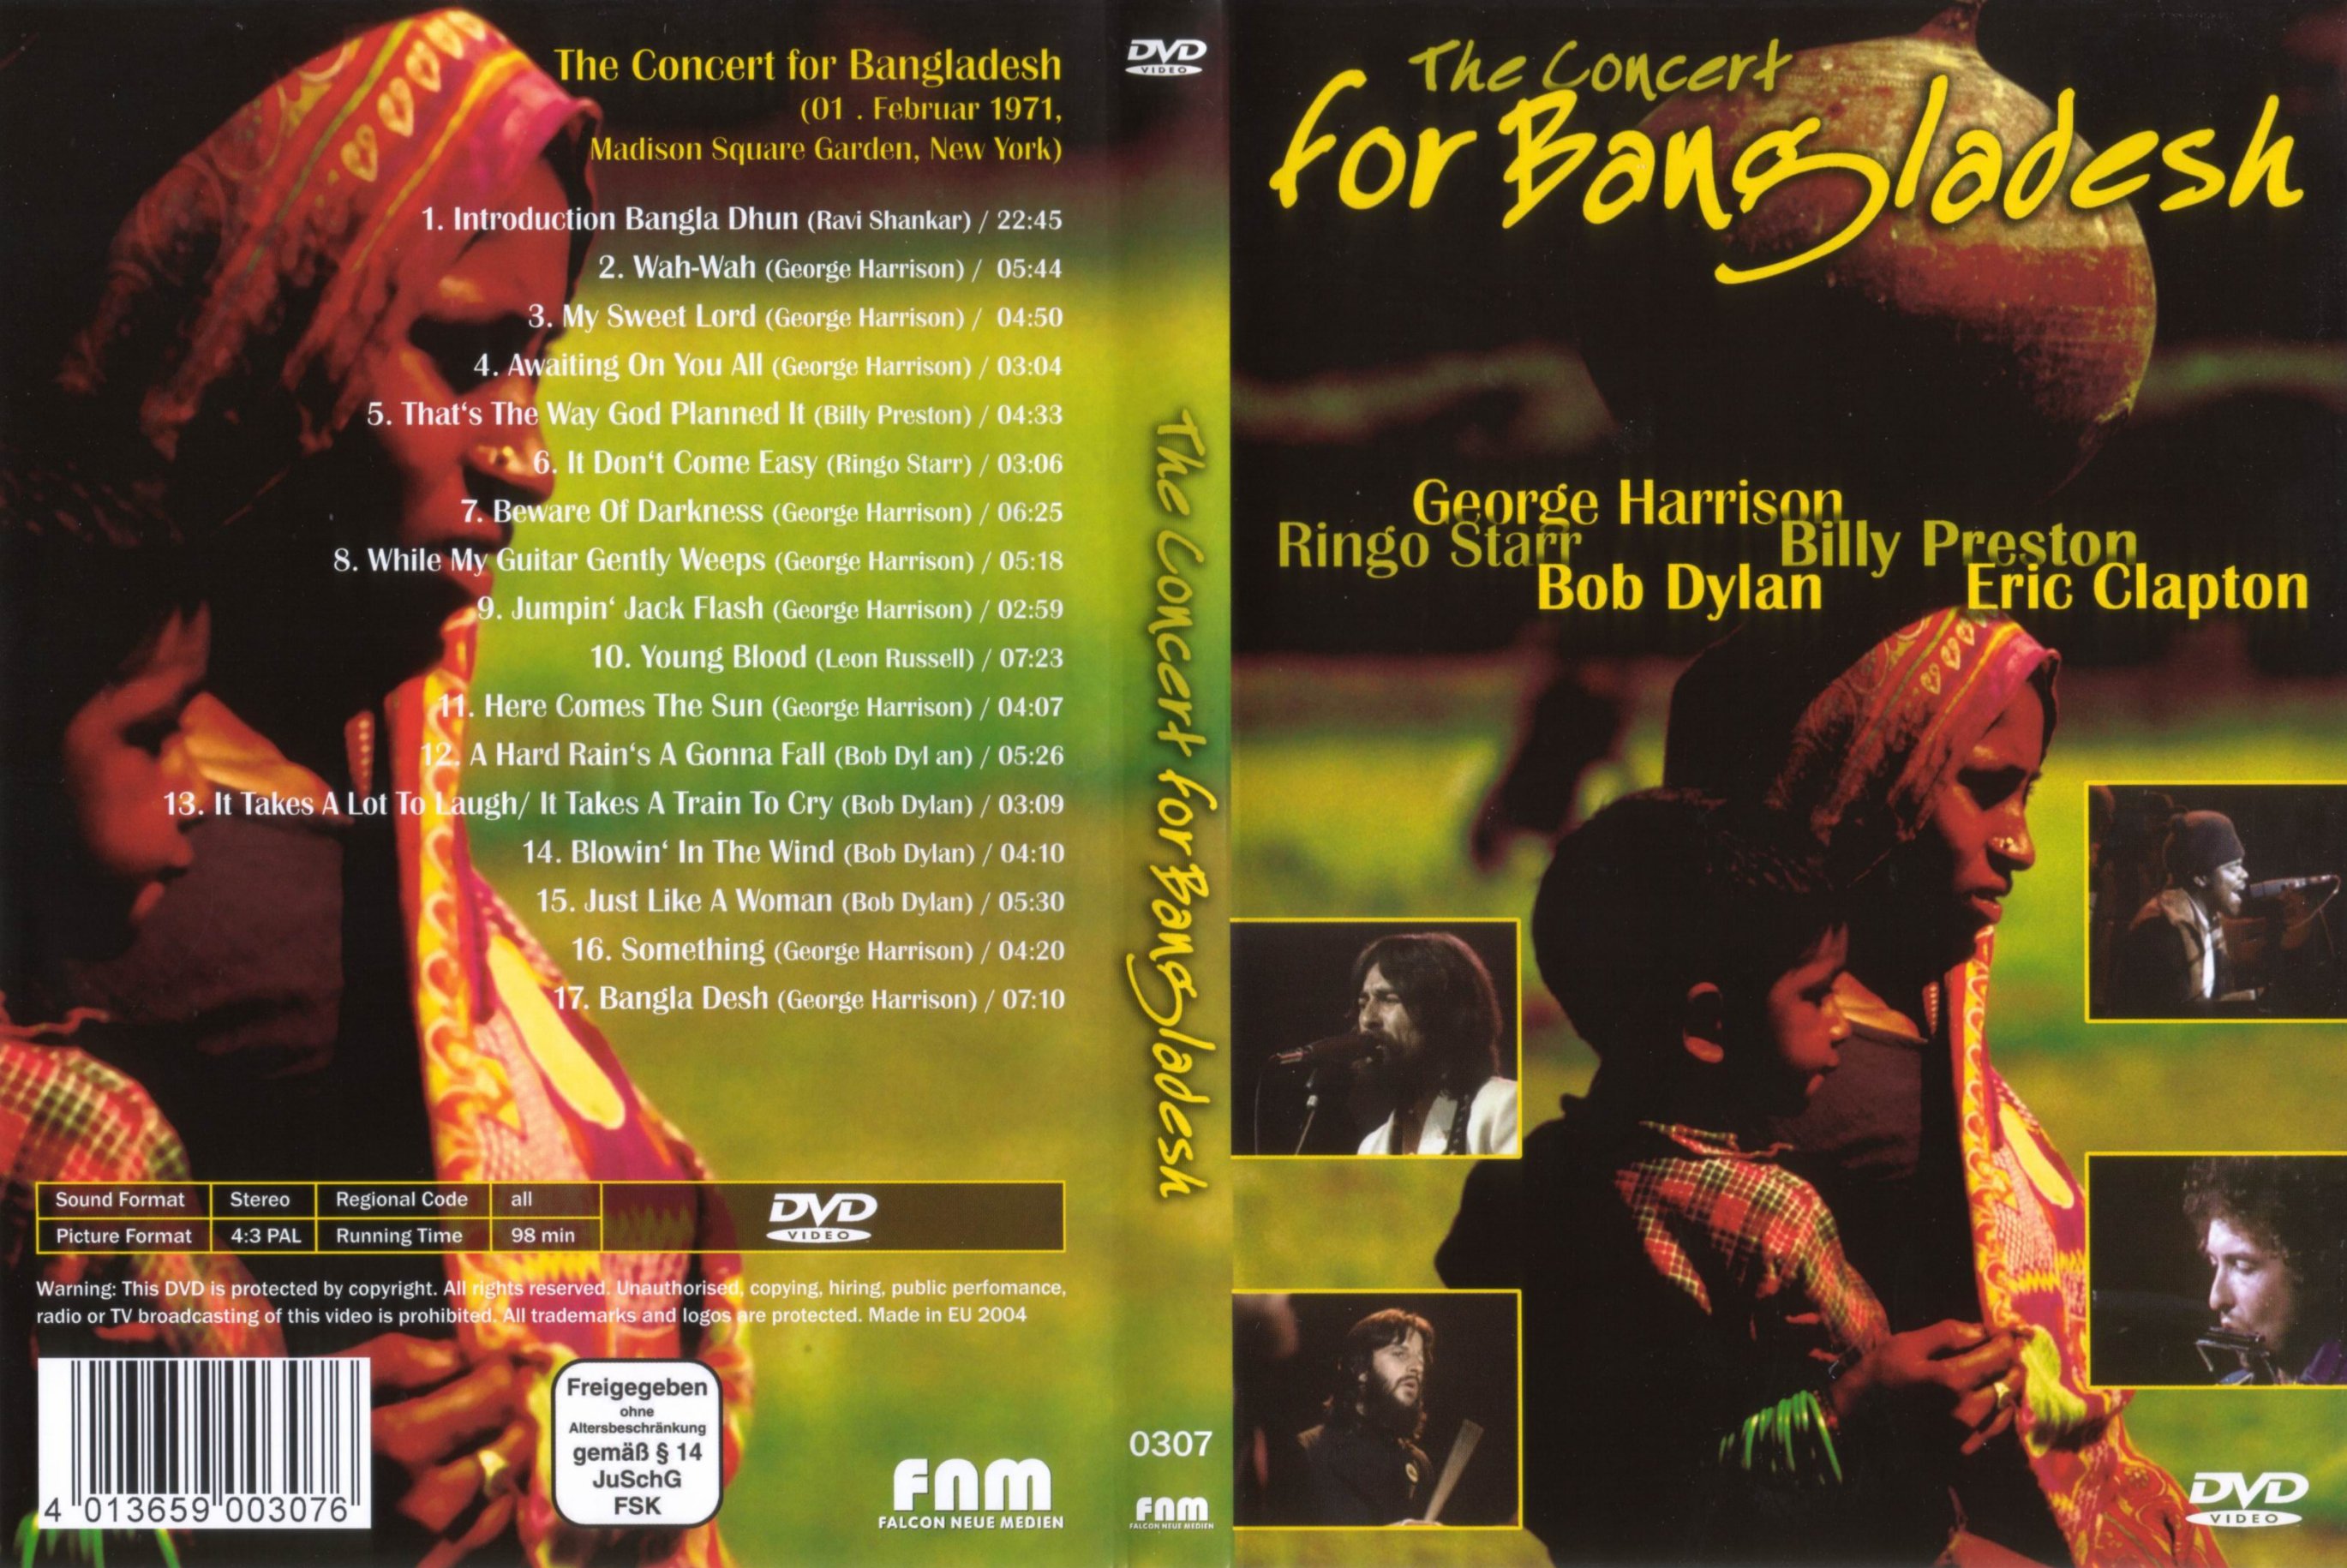 Jaquette DVD The concert for Bangladesh v2